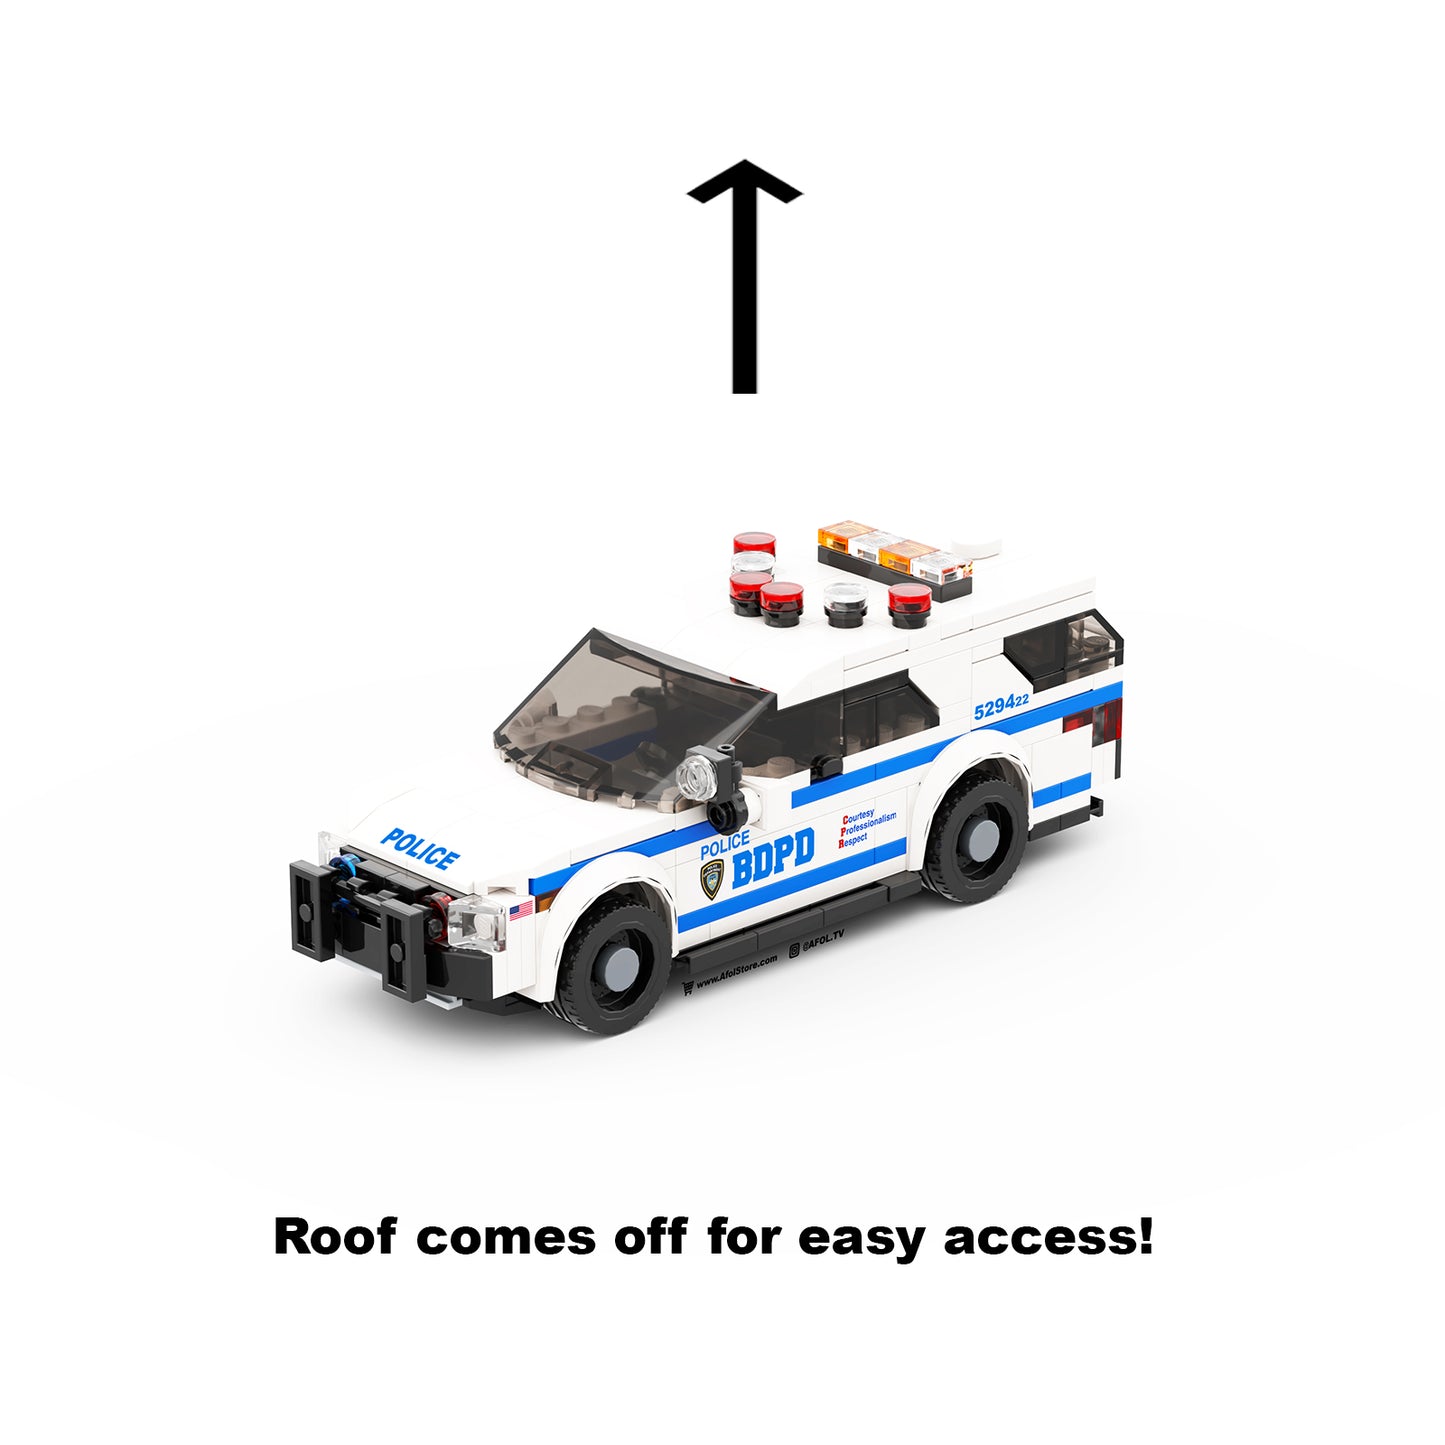 Police SUV